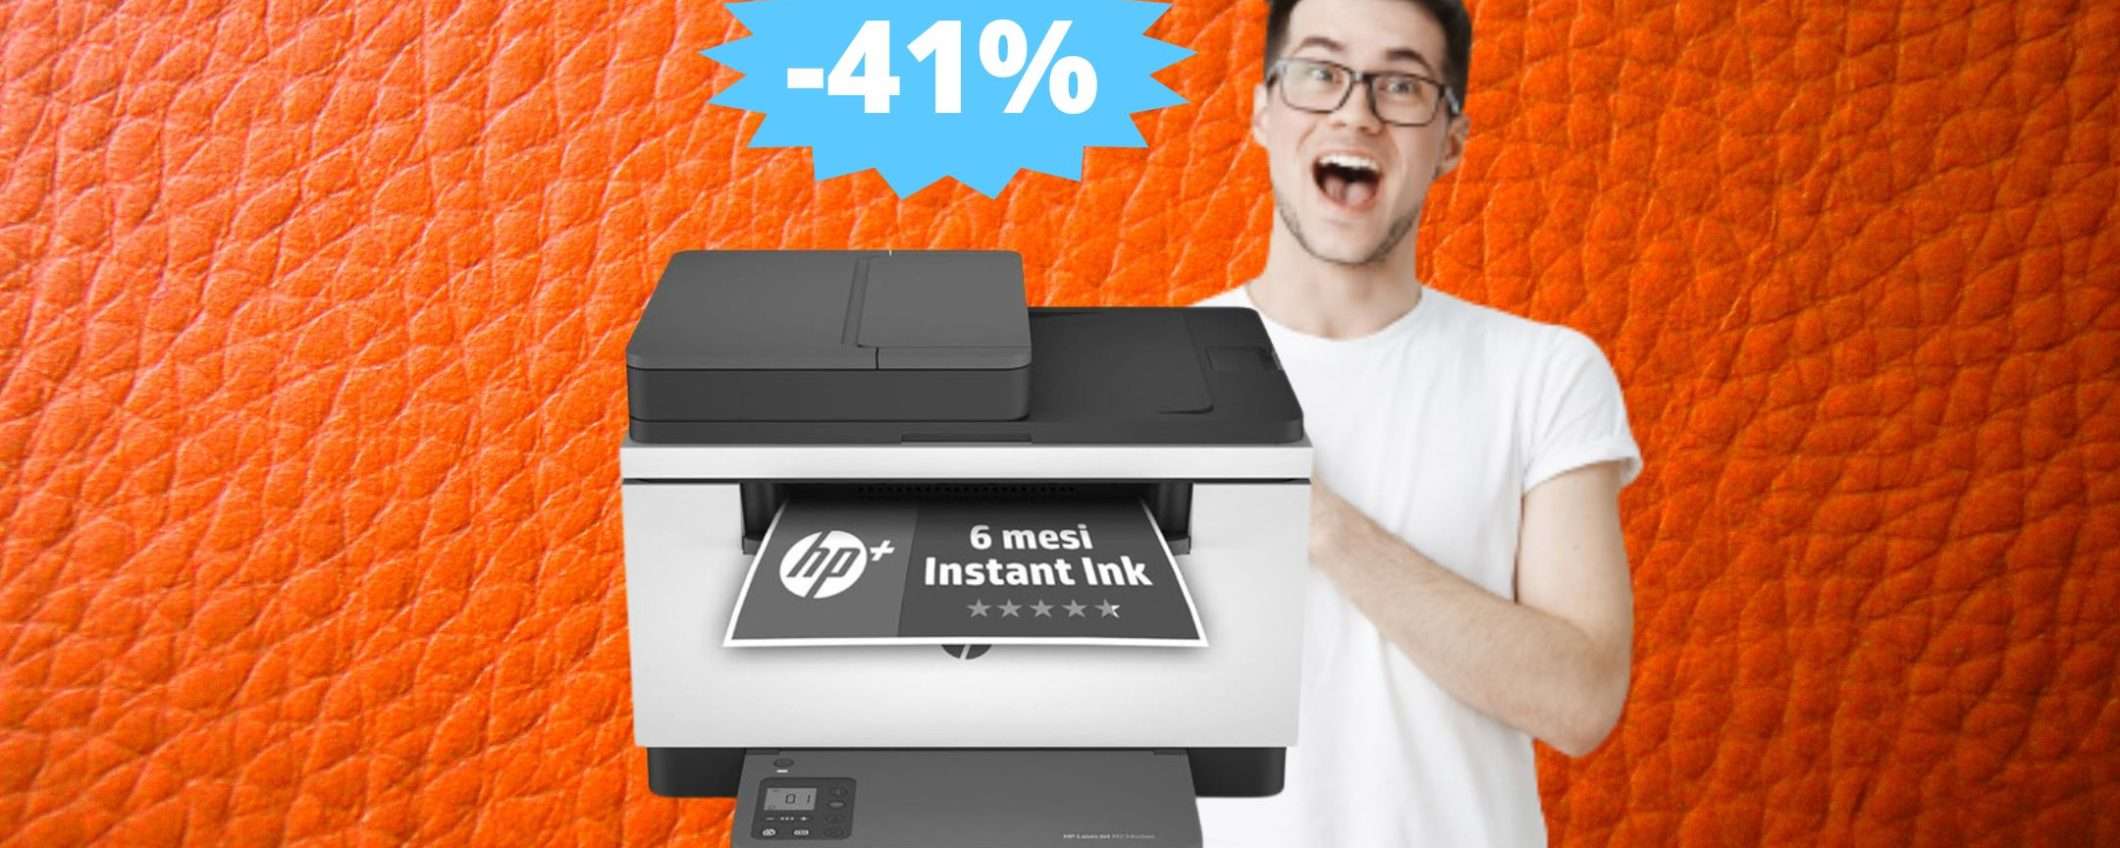 Stampante HP LaserJet M234: sconto FOLLE del 41% su Amazon